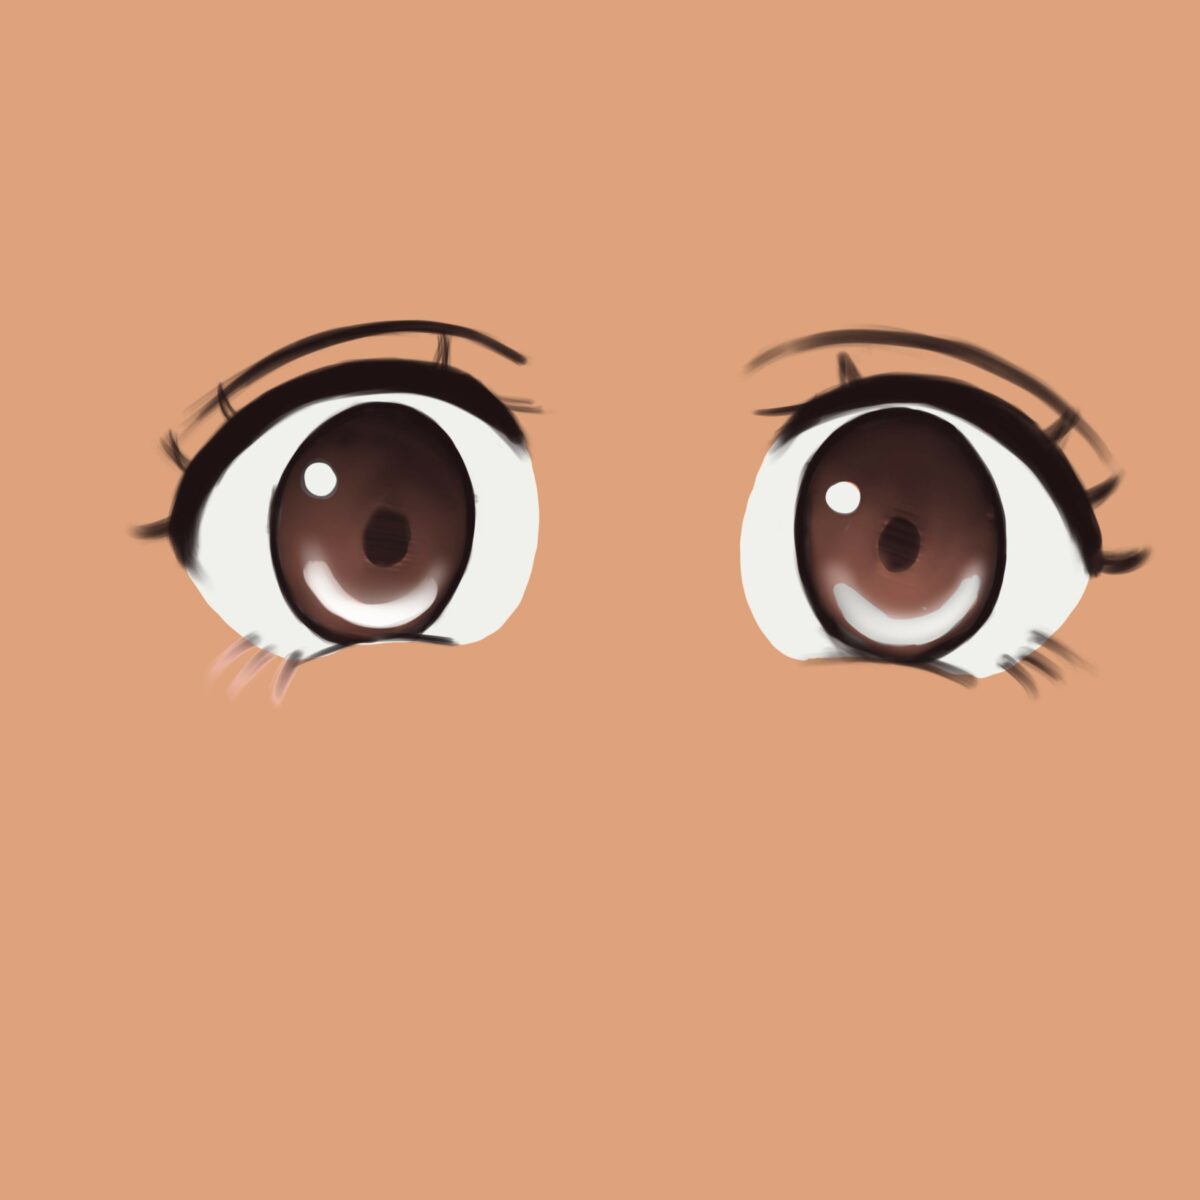 How to Draw Surprised Anime or Manga Eyes - AnimeOutline